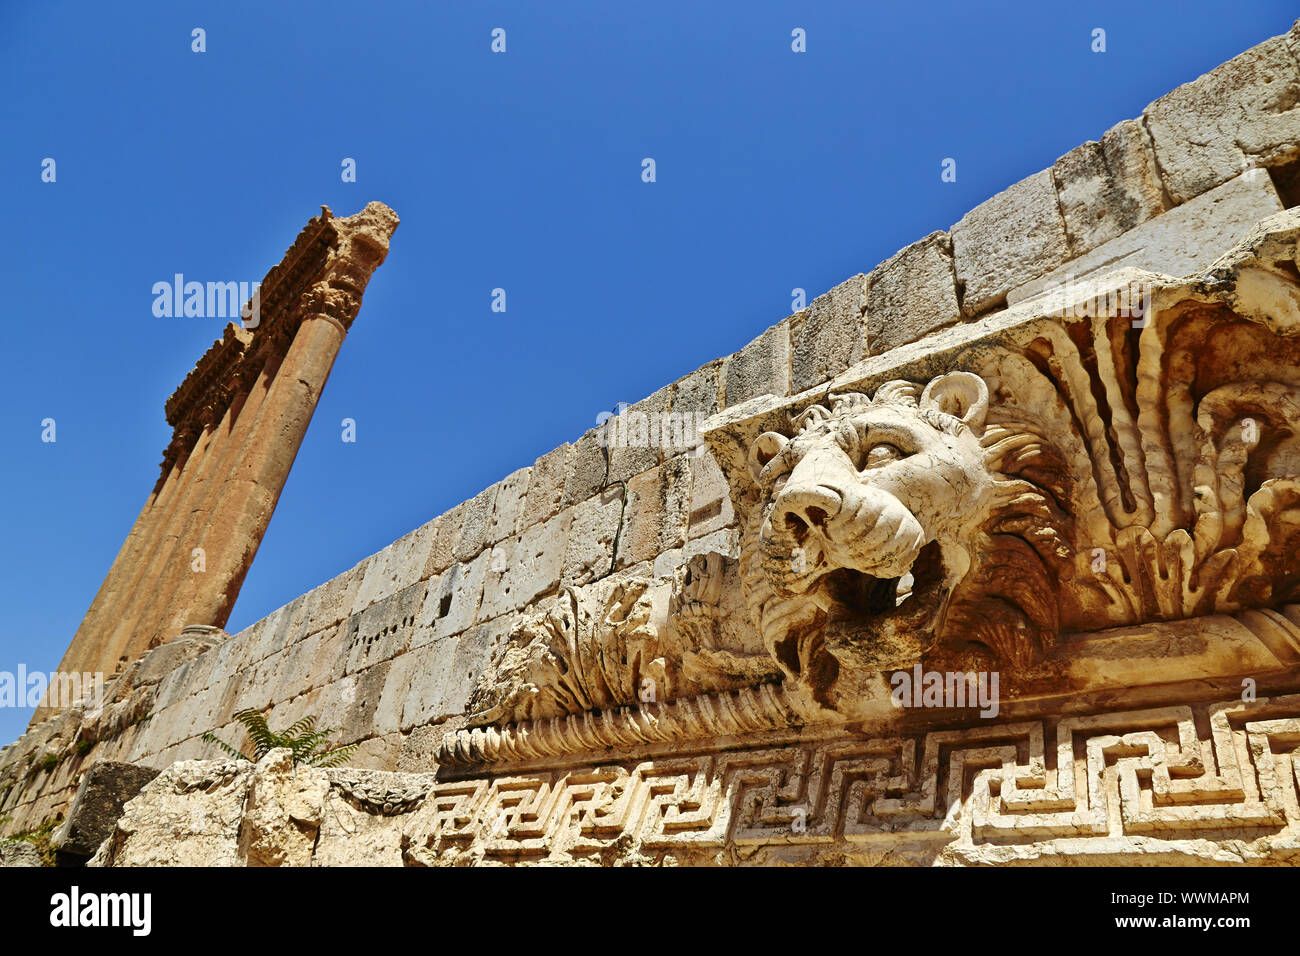 Les colonnes de Jupiter et baalbek lion (Temple de Jupiter) - Baalbek, Liban Banque D'Images